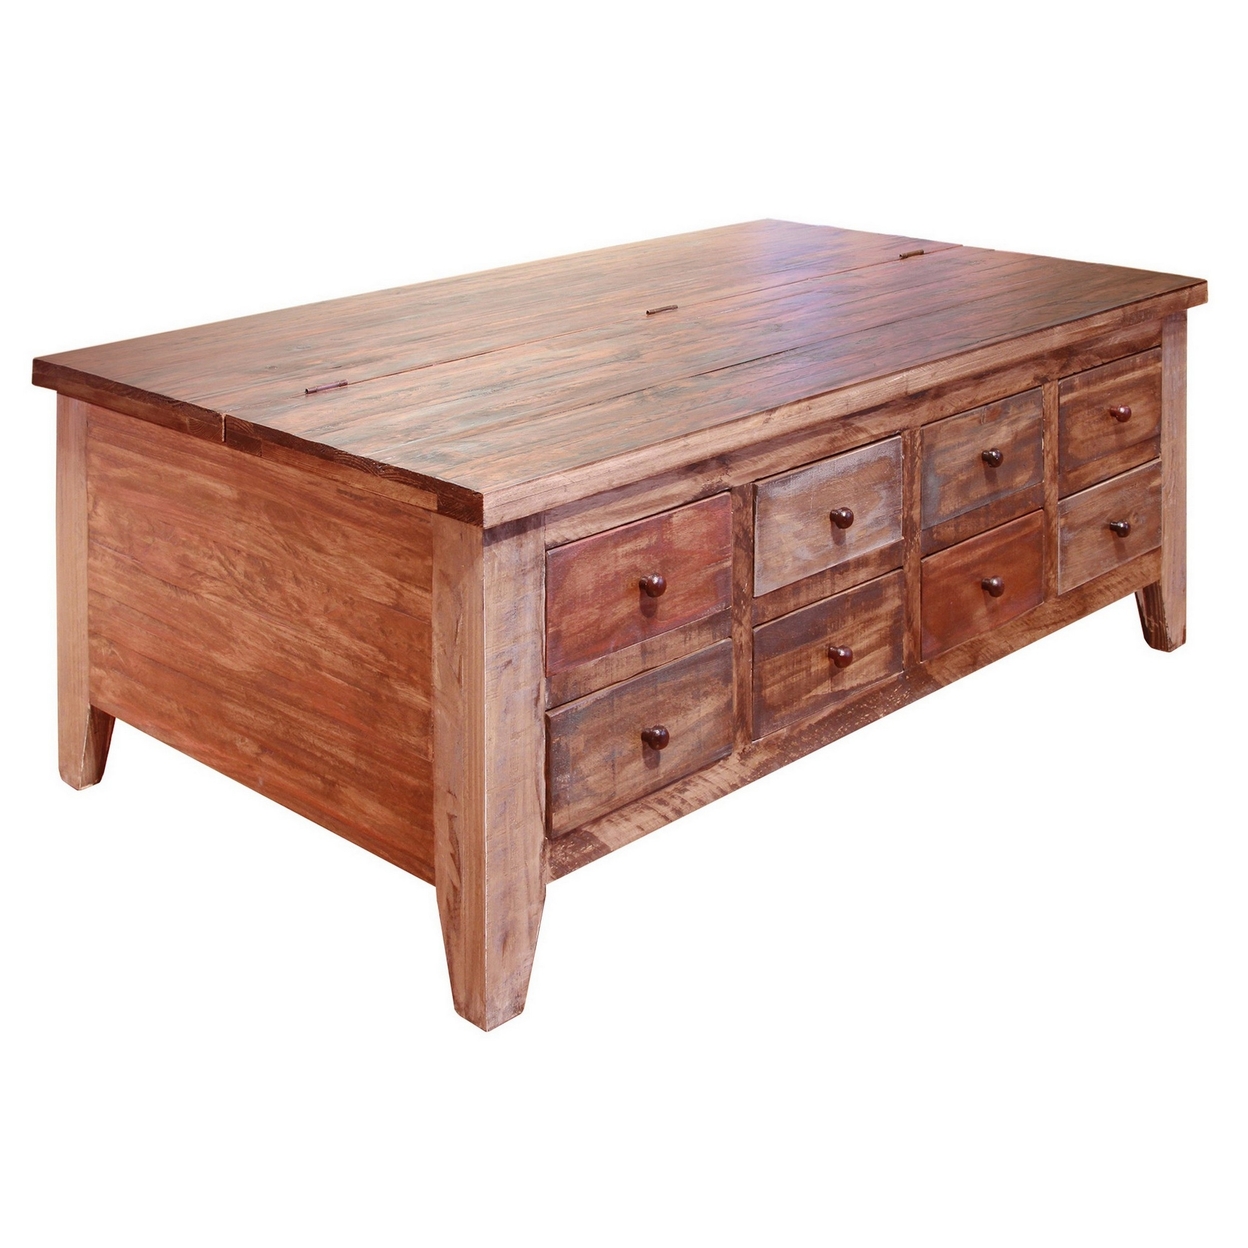 Fena 50 Inch 8 Drawer Coffee Table, Lift Top, Multicolor Distress Pine Wood- Saltoro Sherpi